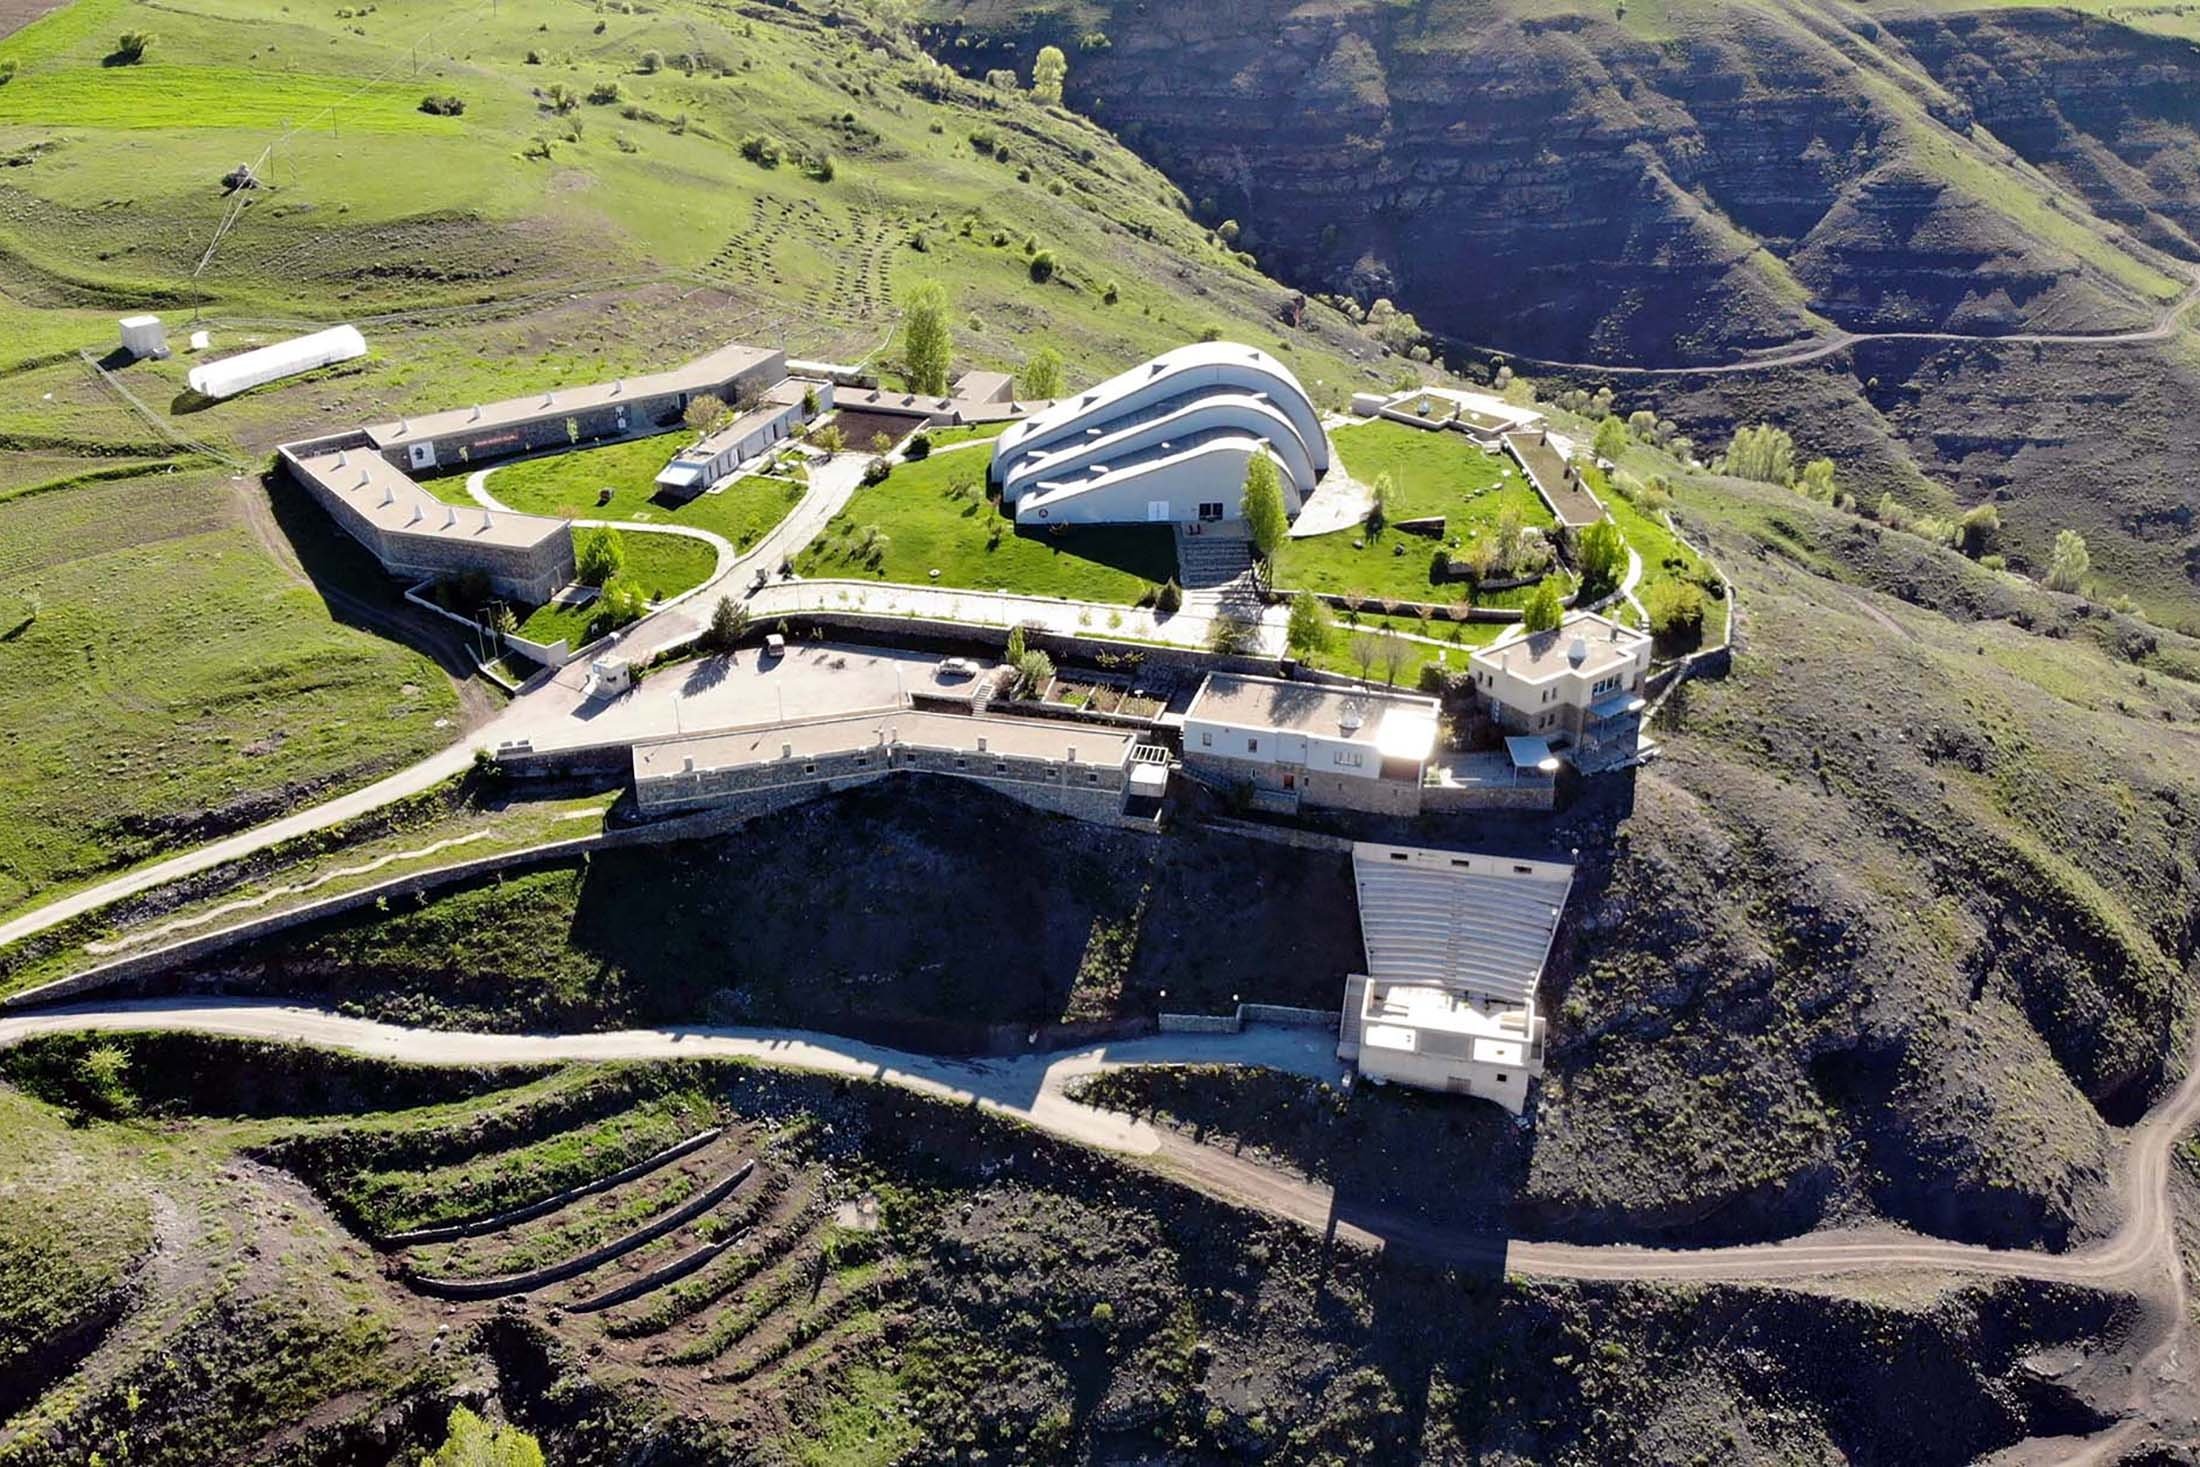 Turkey's extraordinary Baksı Museum launches environmental project